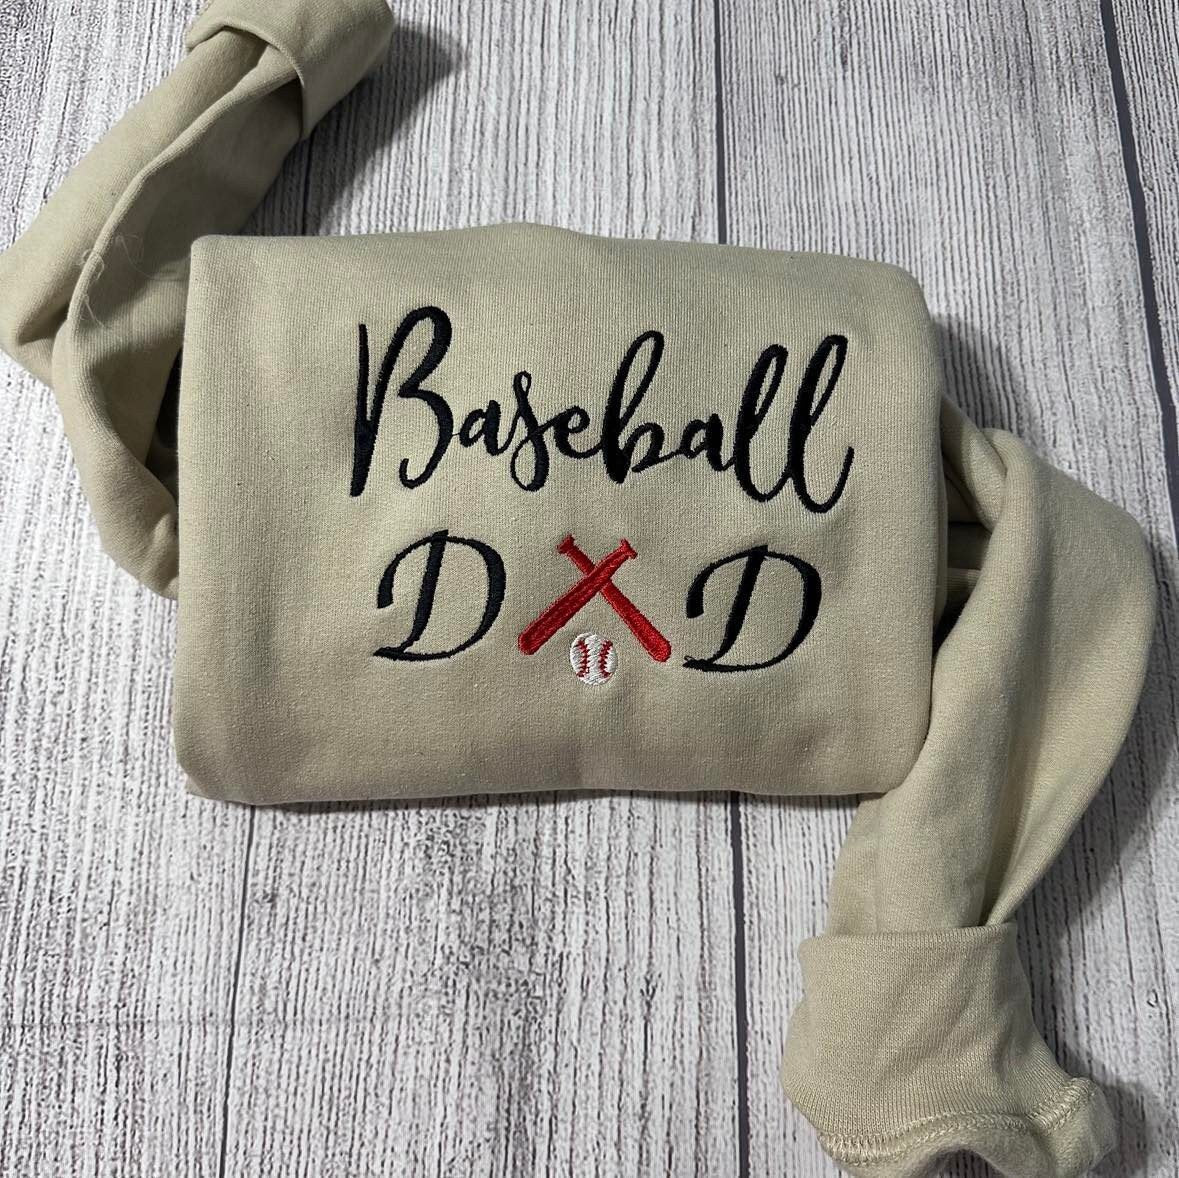 Baseball Dad embroidered sweatshirt;Baseball embroidered crewneck, baseball lover's sweatshirt; Father's Day gift; gift for him shirt